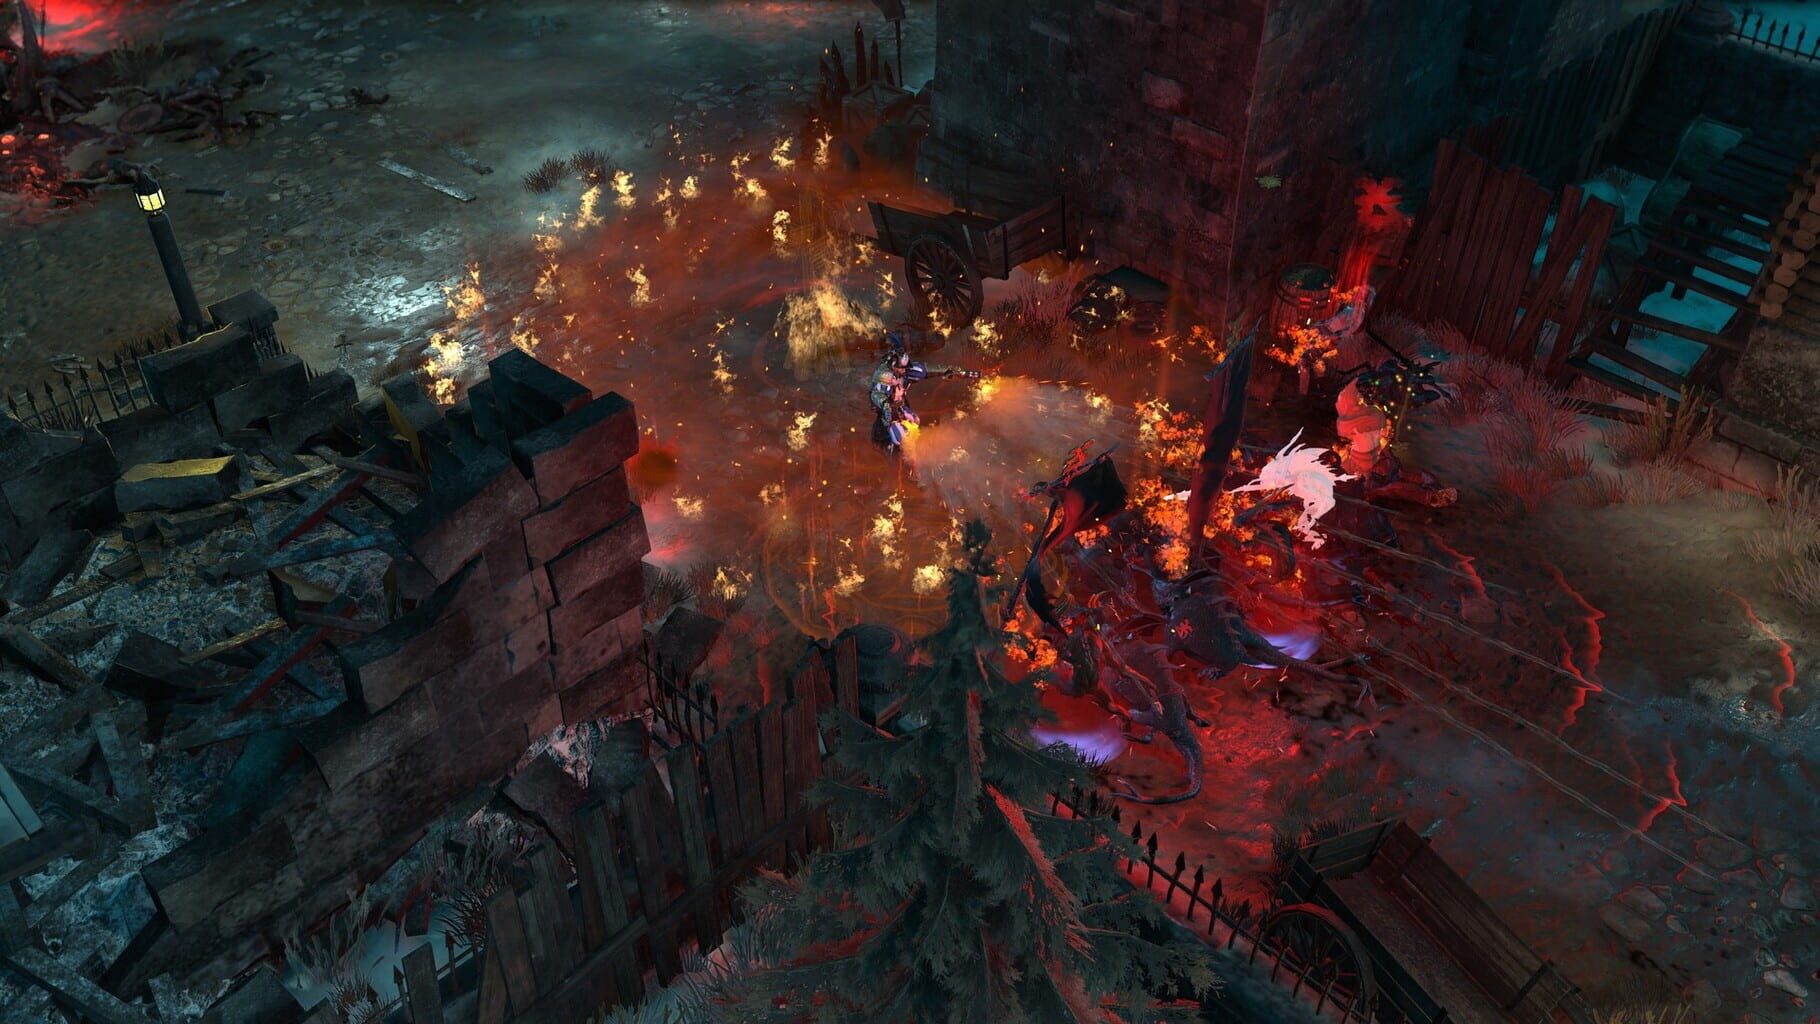 Warhammer: Chaosbane - Witch Hunter Image